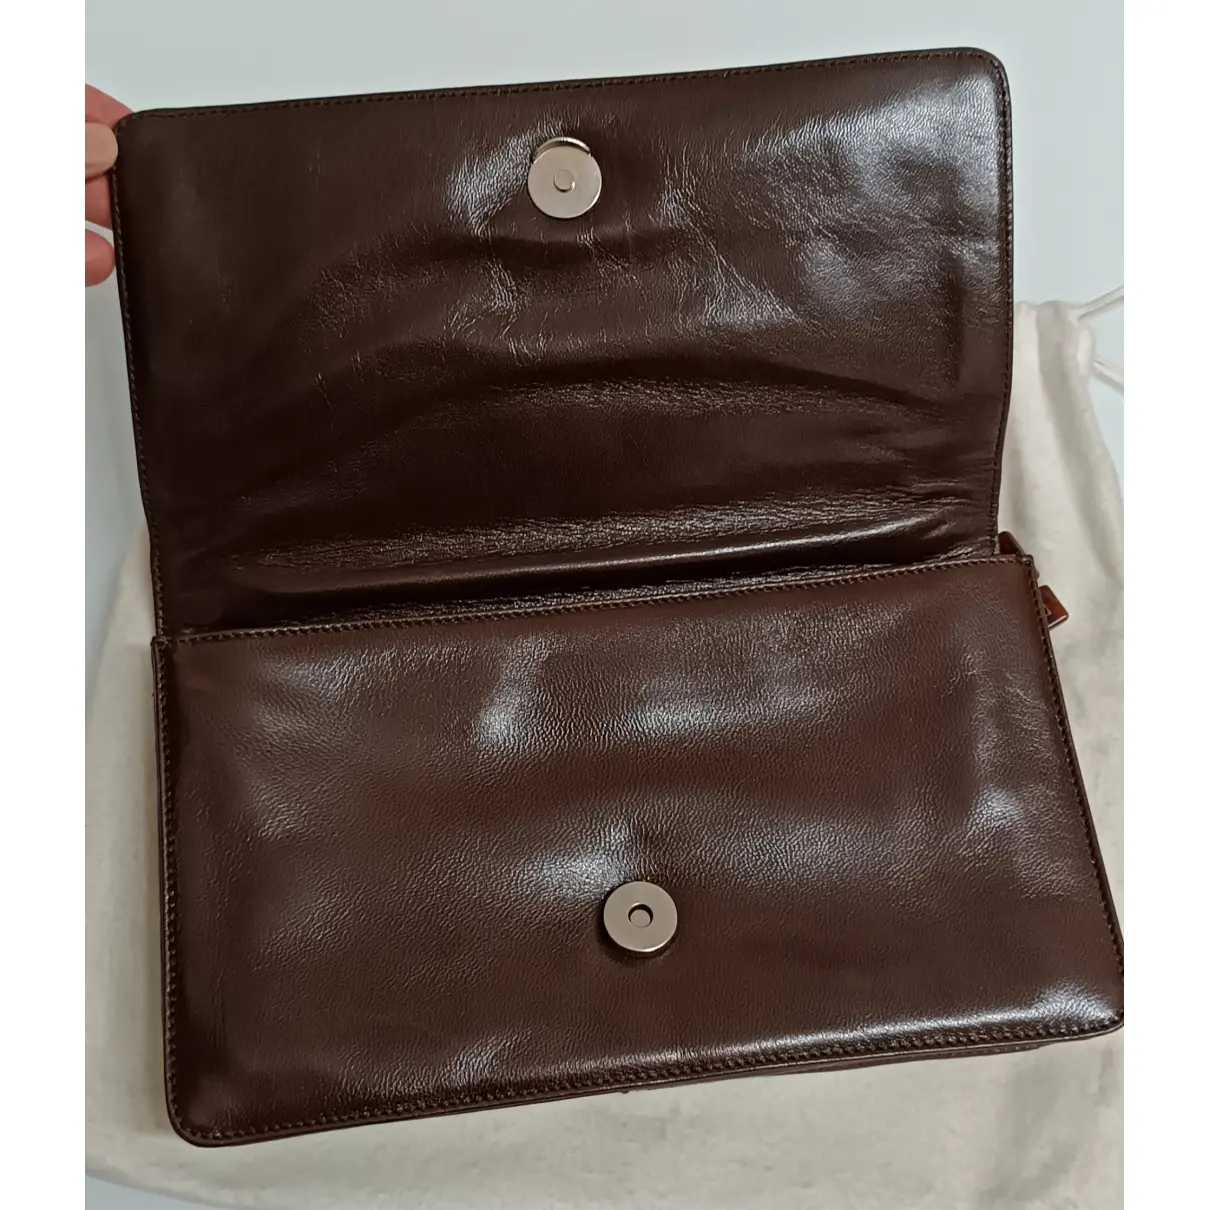 Buy Prada Leather crossbody bag online